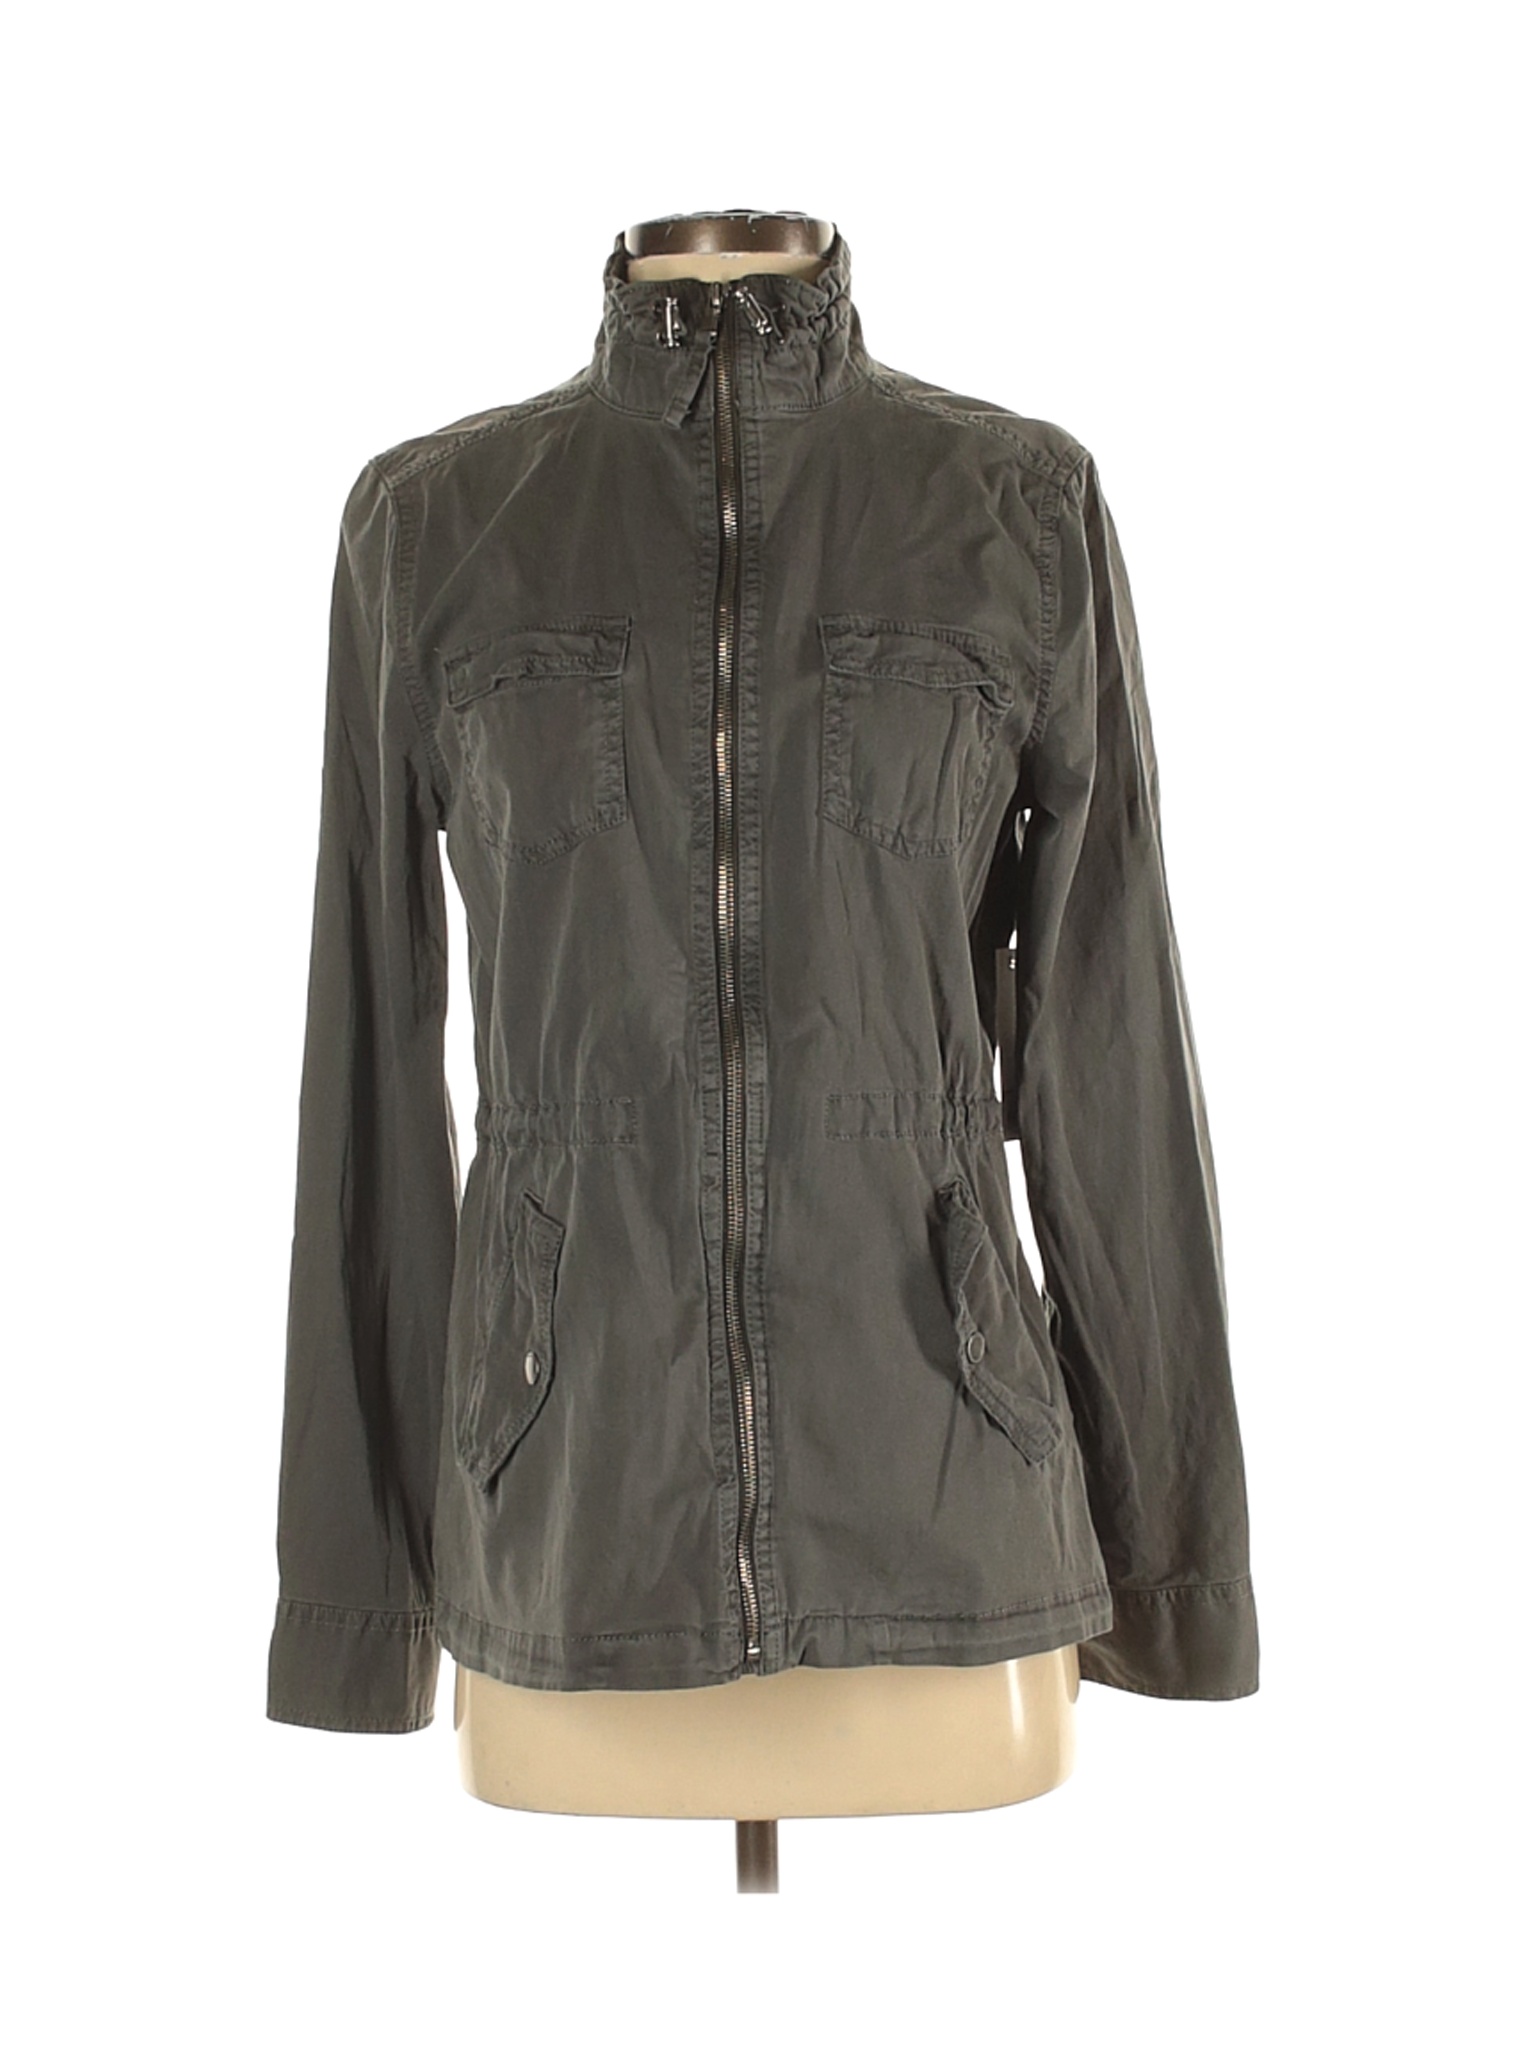 NWT Sonoma Goods for Life Women Gray Jacket S | eBay